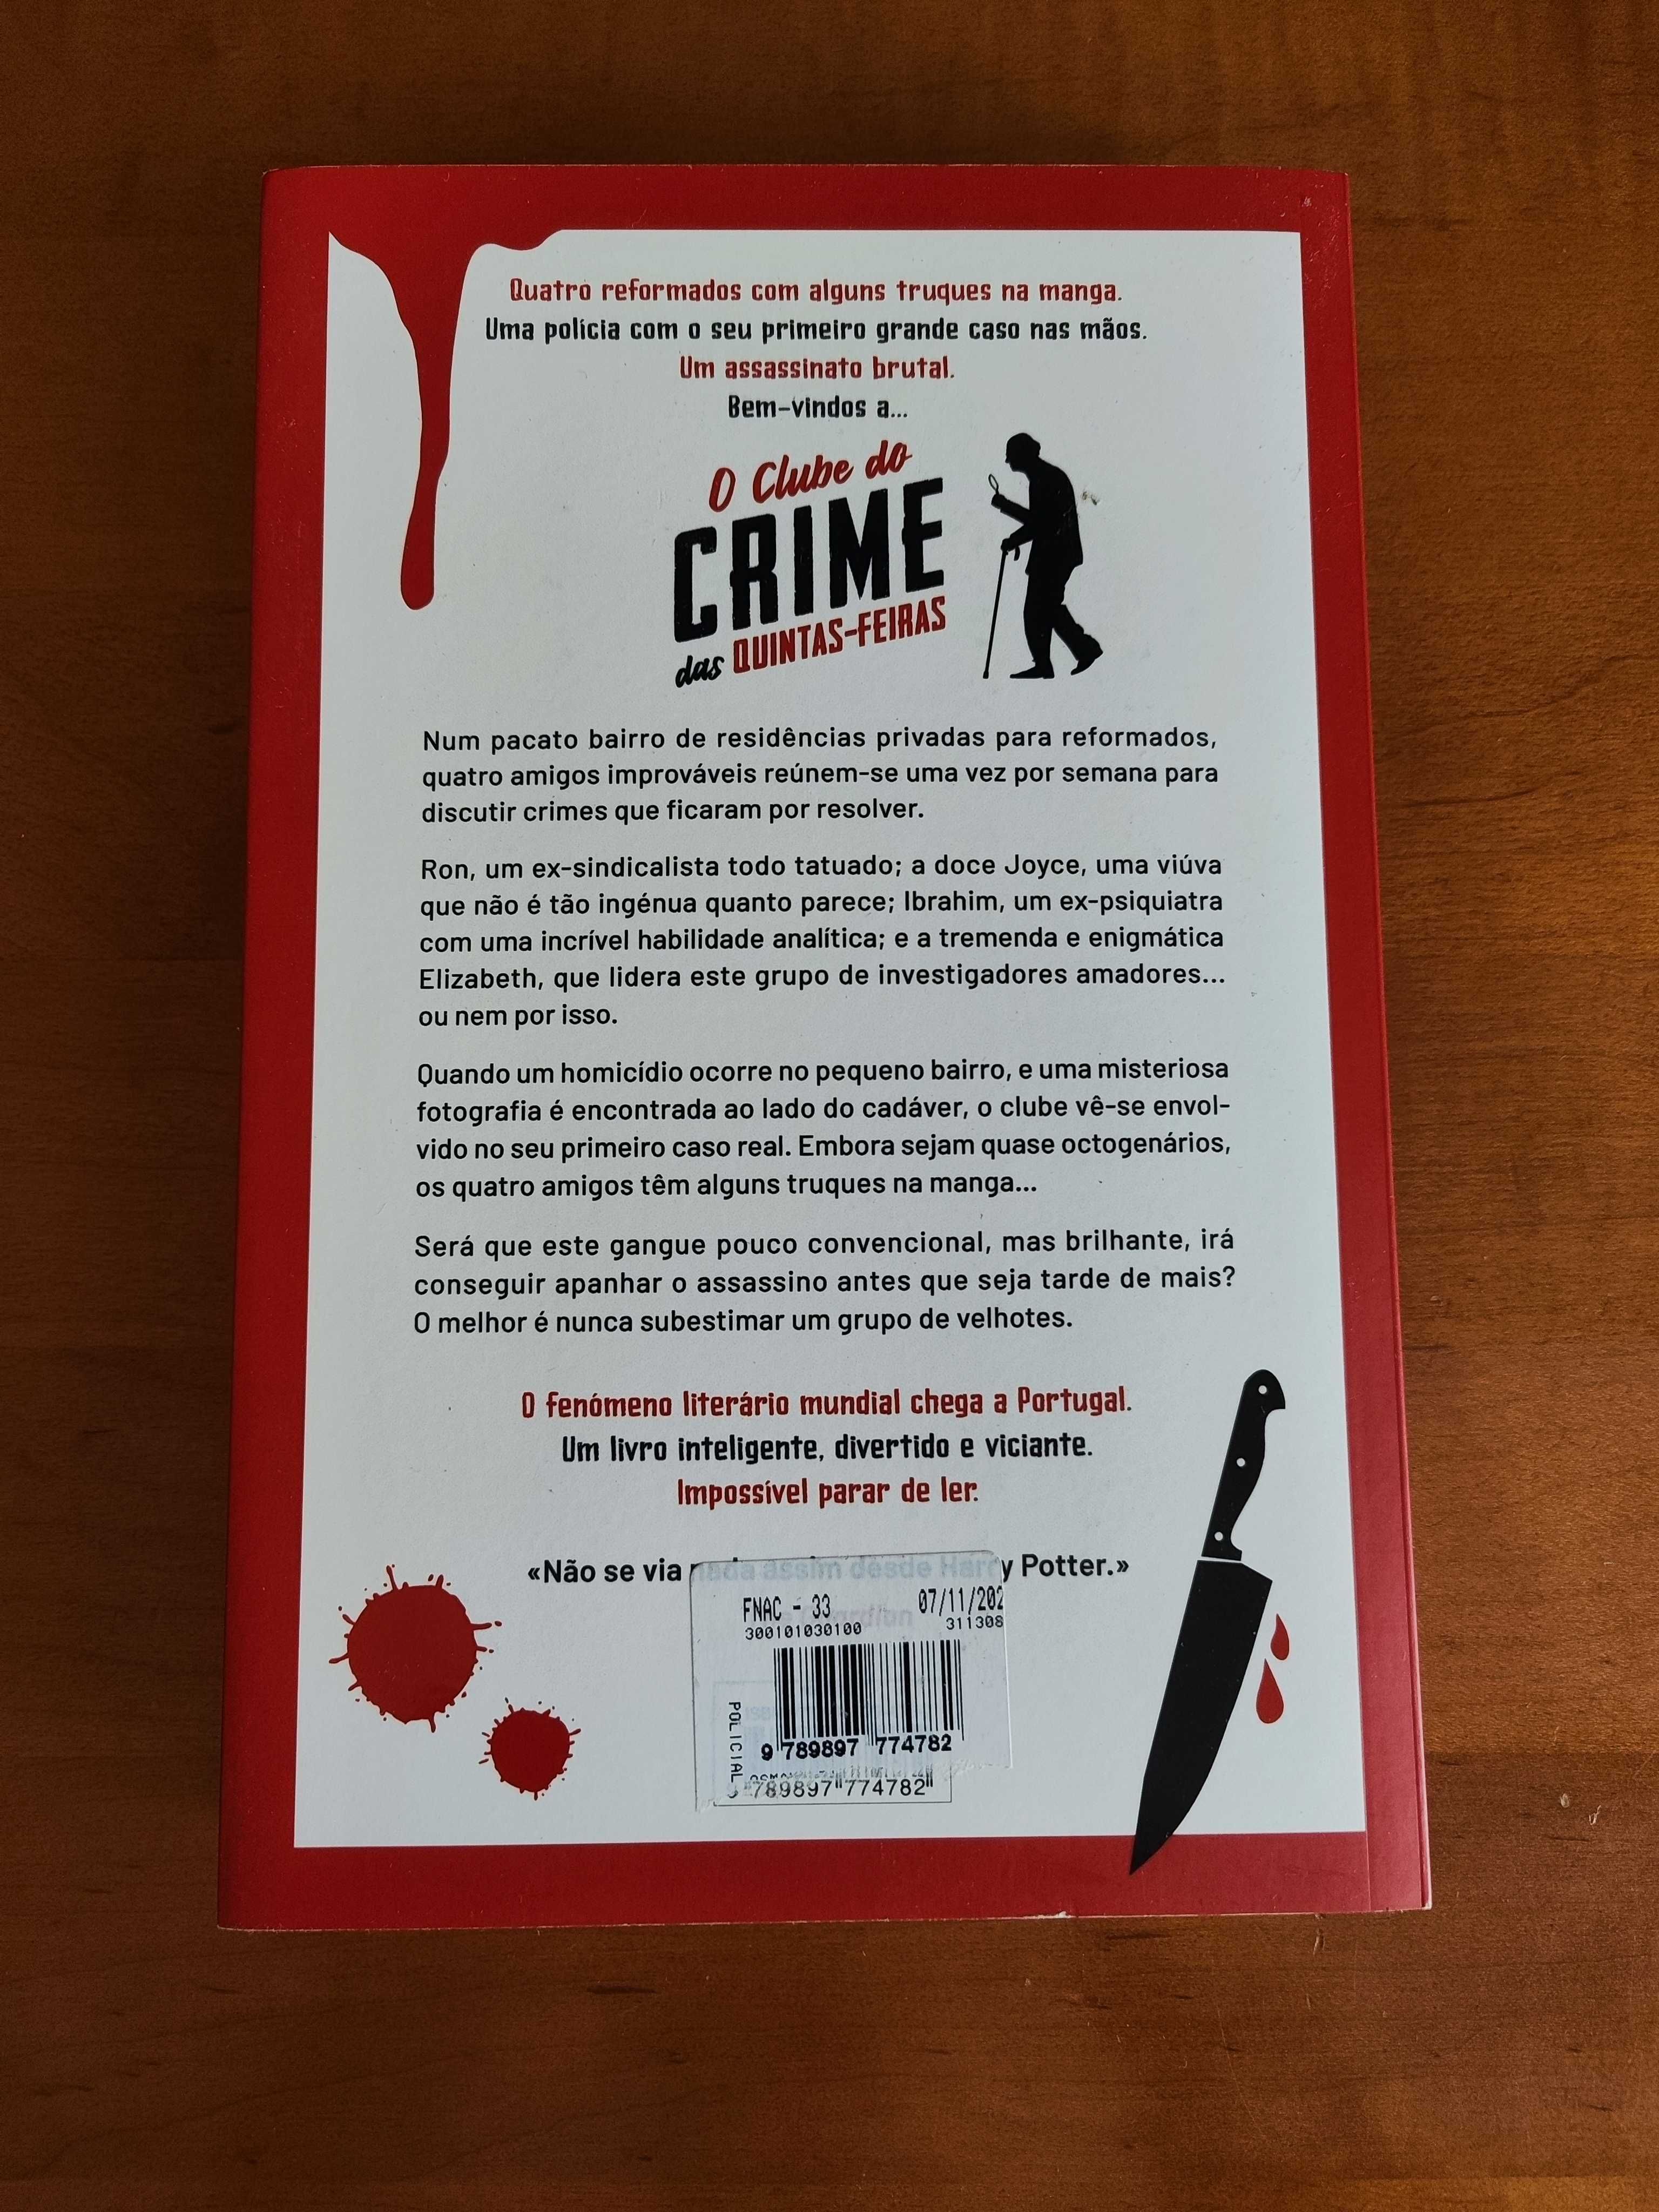 Livro "O Clube do Crime das Quintas-Feiras"